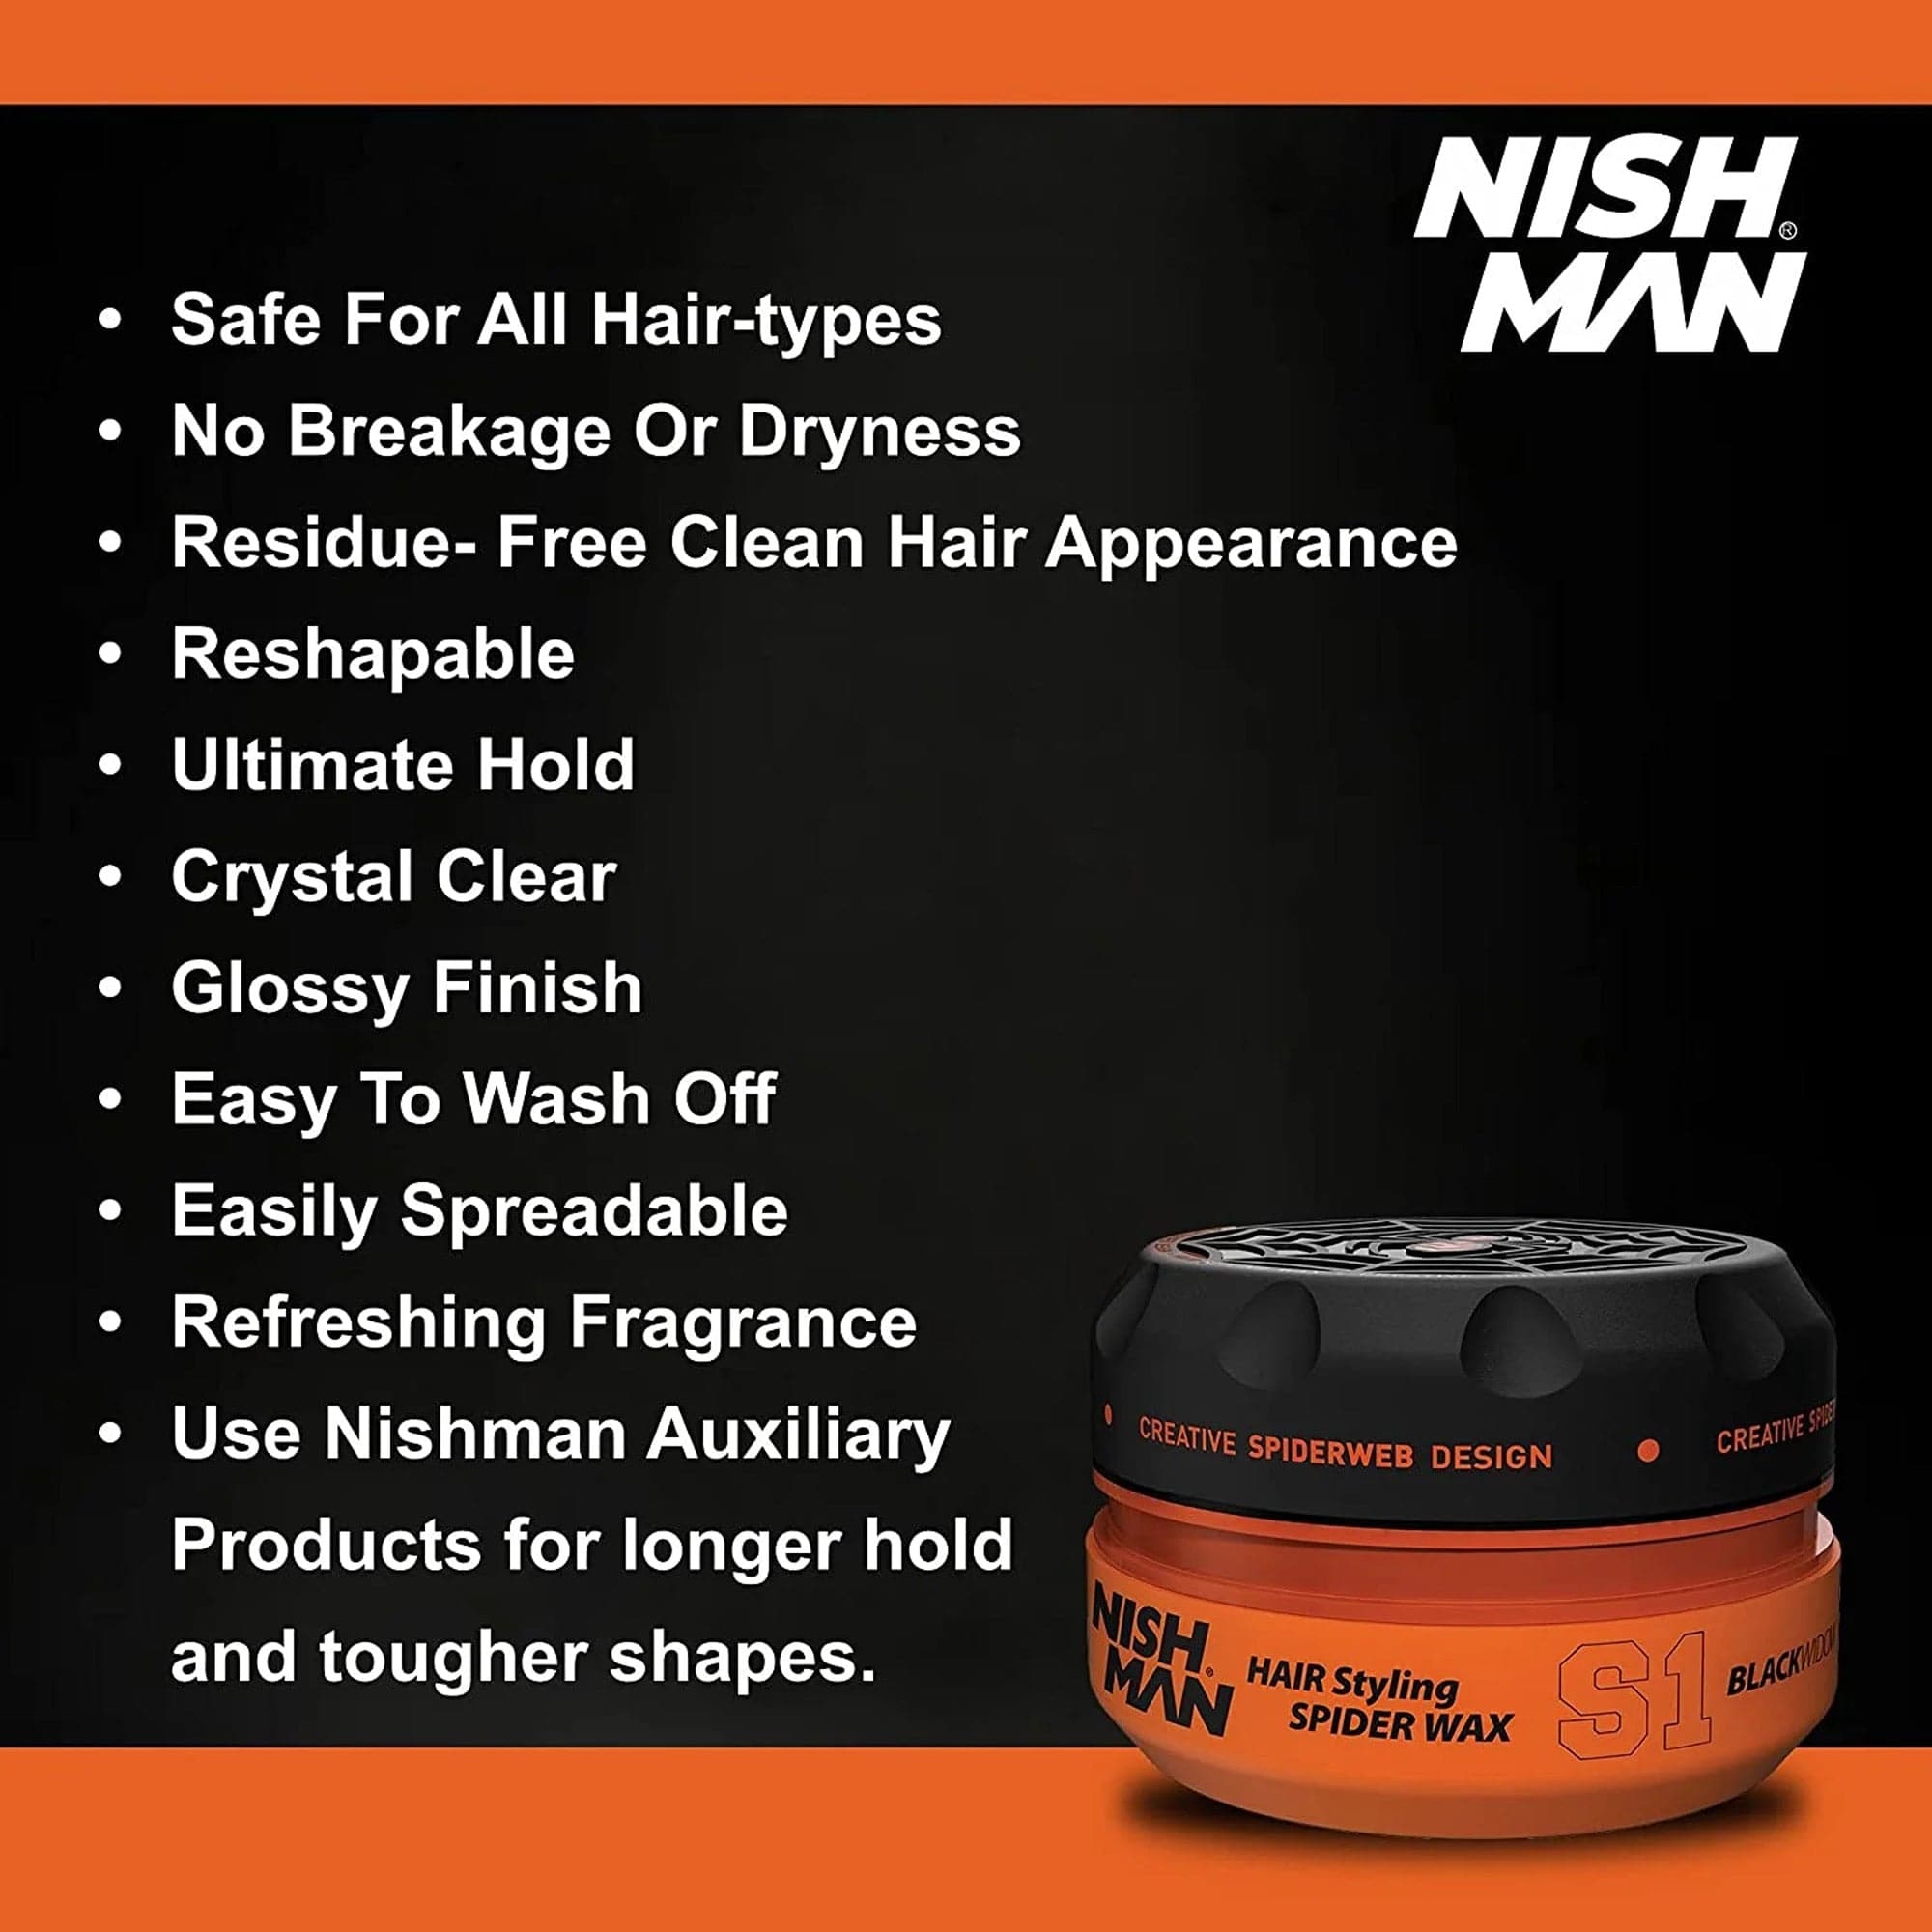 Nishman - Hair Styling Spider Wax S1 Blackwidow 150ml